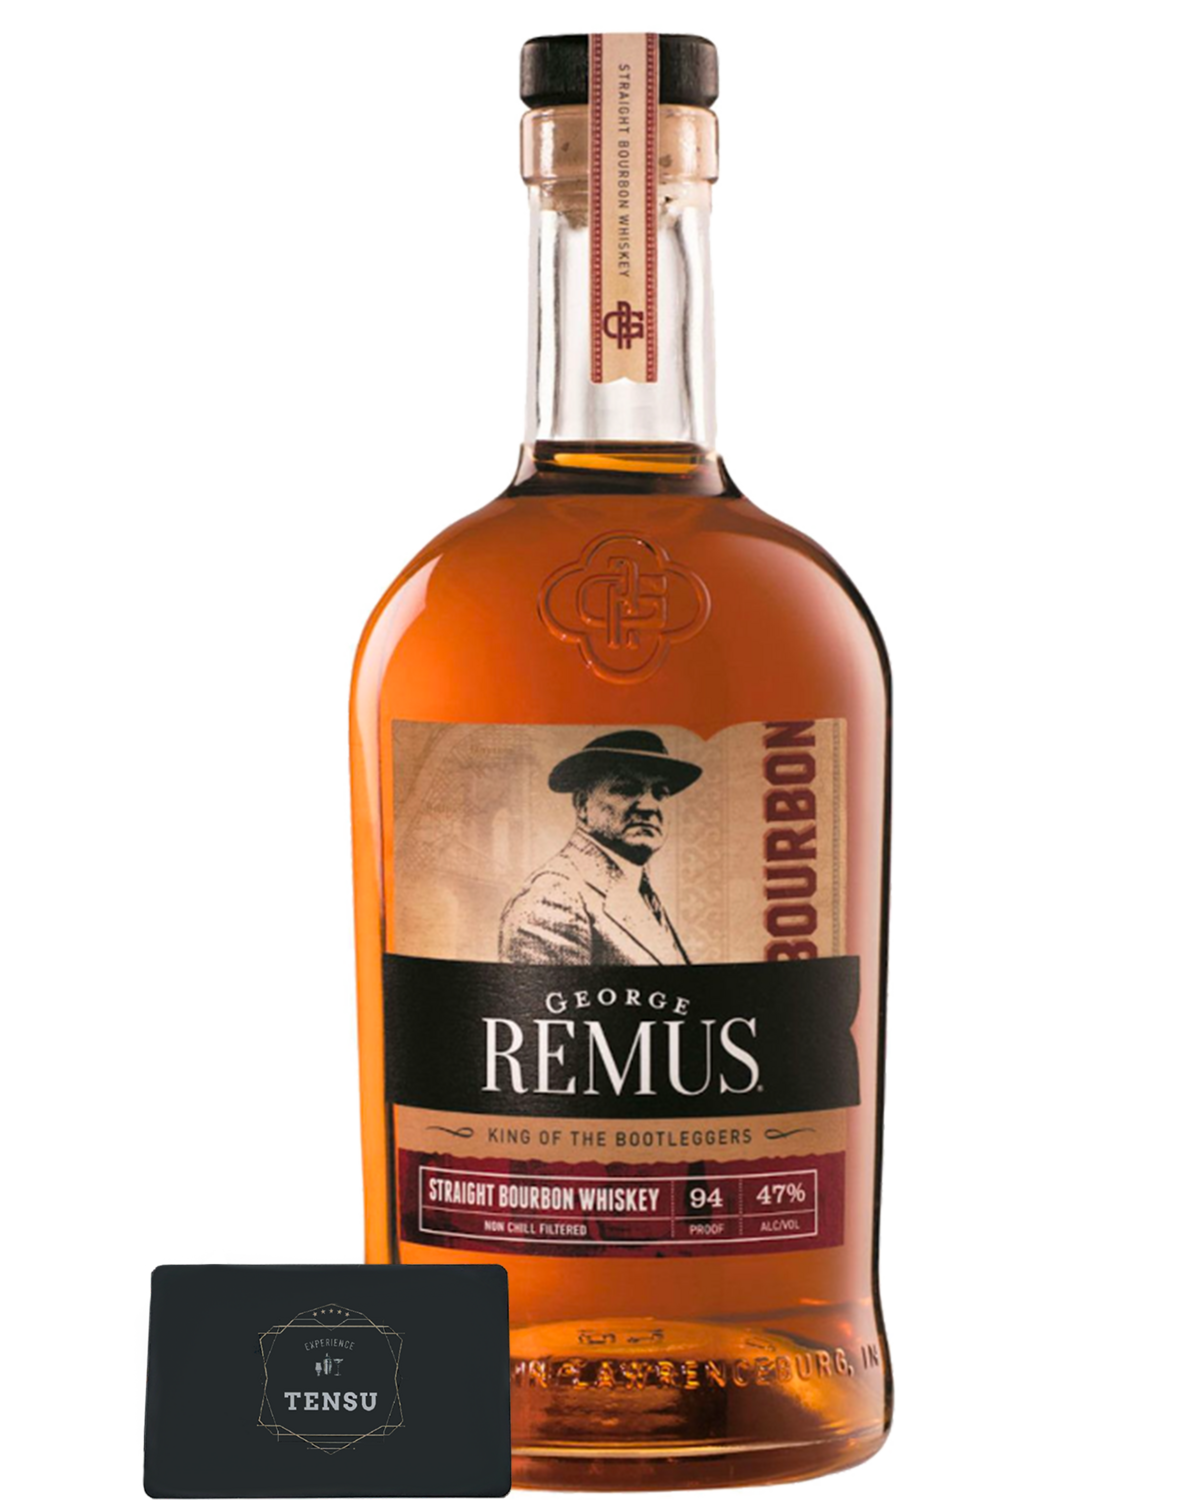 George Remus Straight Bourbon Whiskey 47.0 "OB"